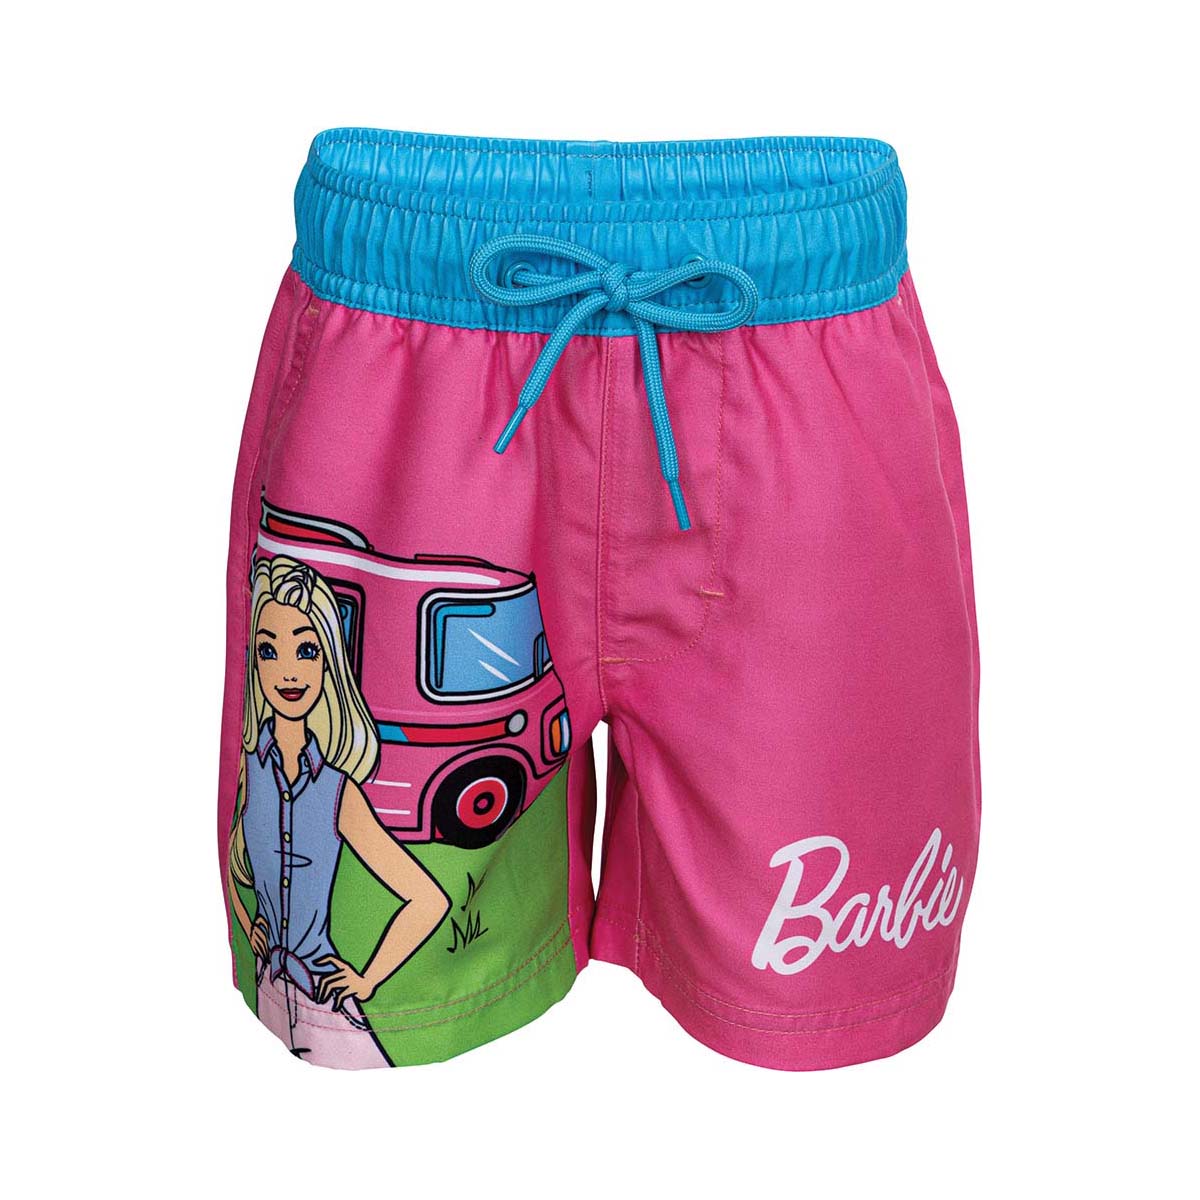 Barbie Kids' Shorts Pink 4